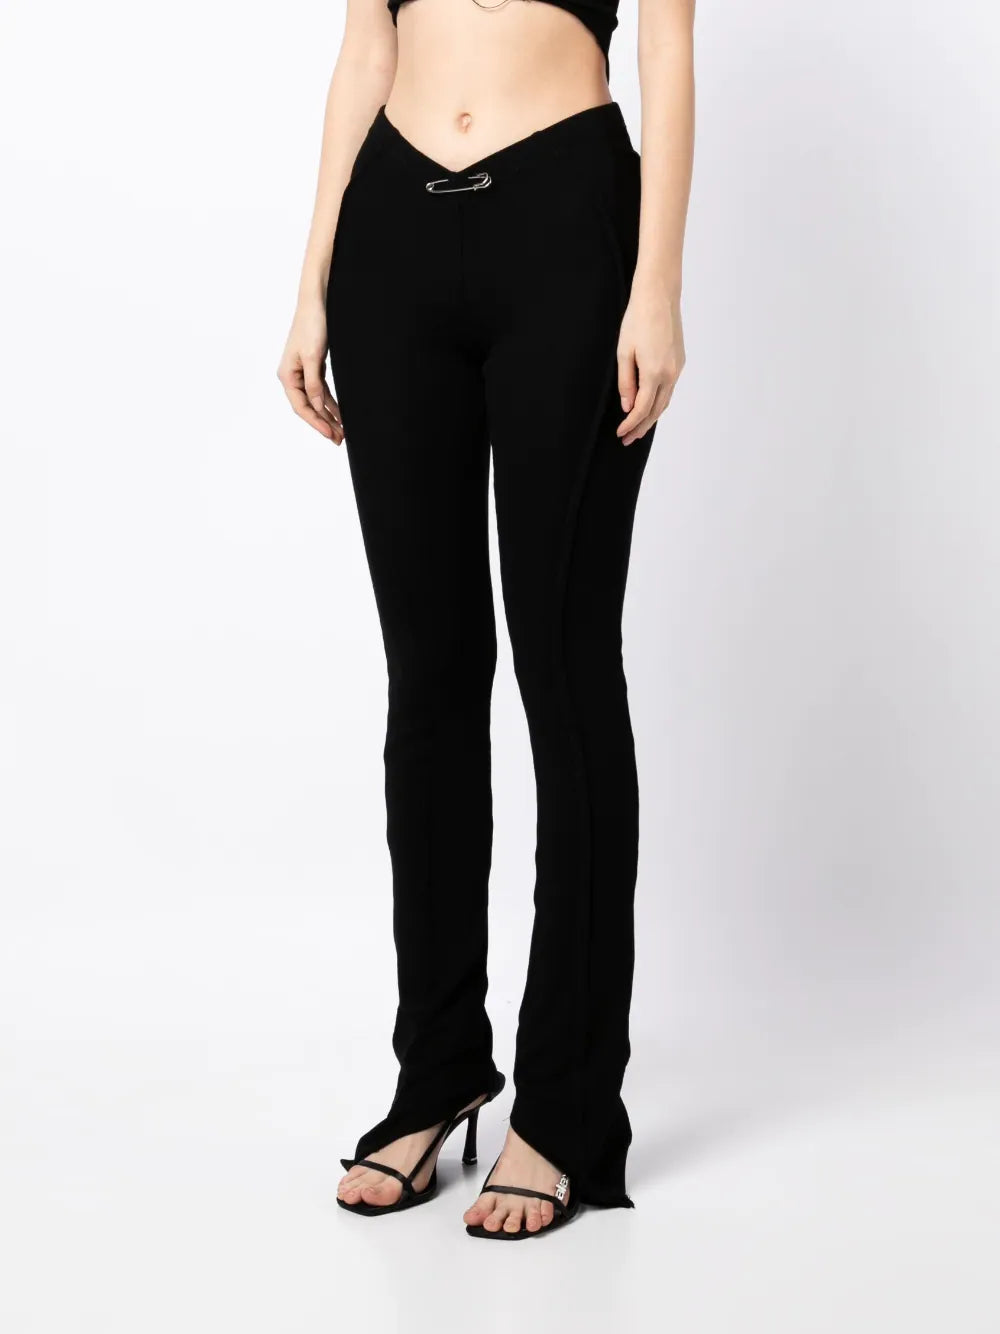 SAMI MIRO VINTAGE Asymmetric Pants Black - MAISONDEFASHION.COM